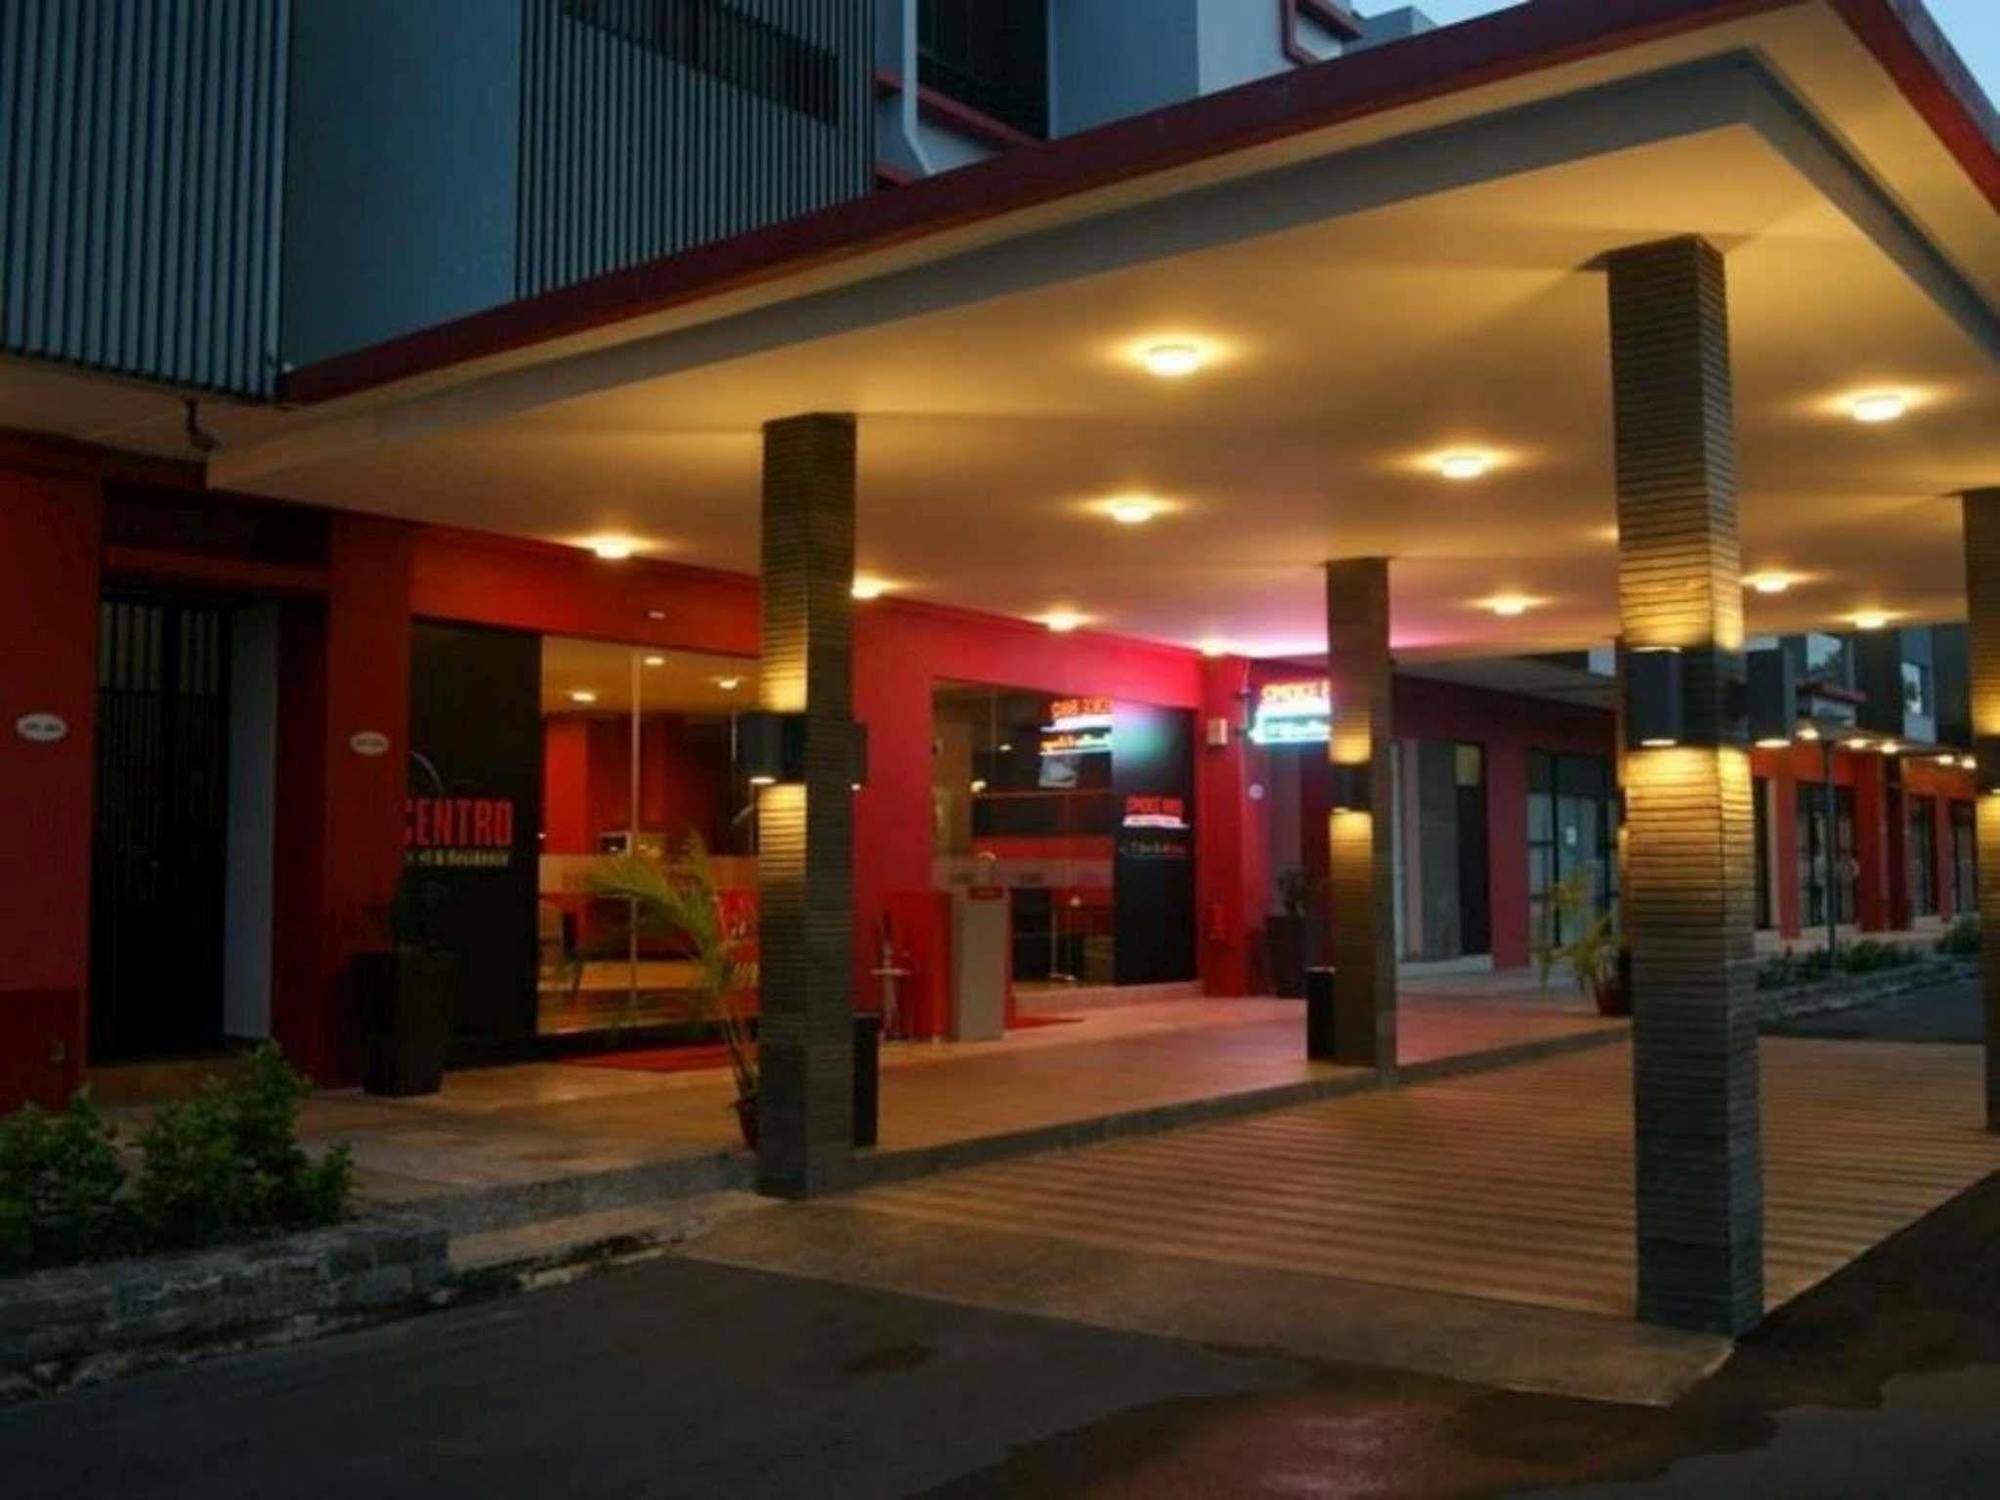 The Centro Hotel & Residence By Orchardz Batam Exterior photo